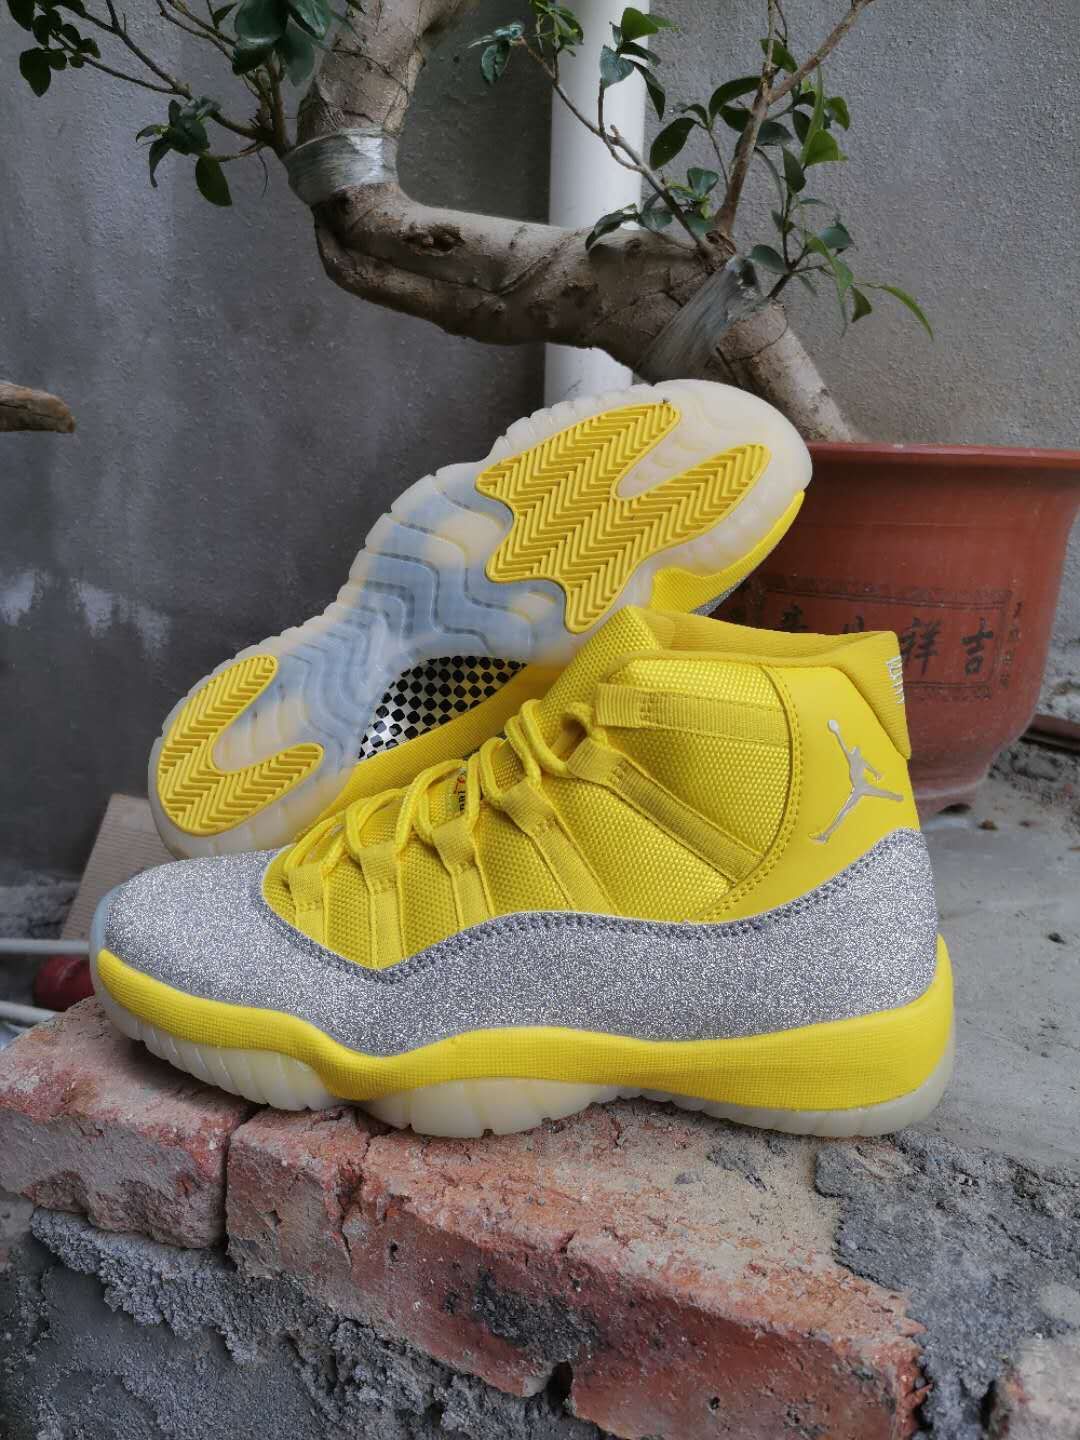 New Air Jordan 11 Gypsophila Yellow Grey Shoes